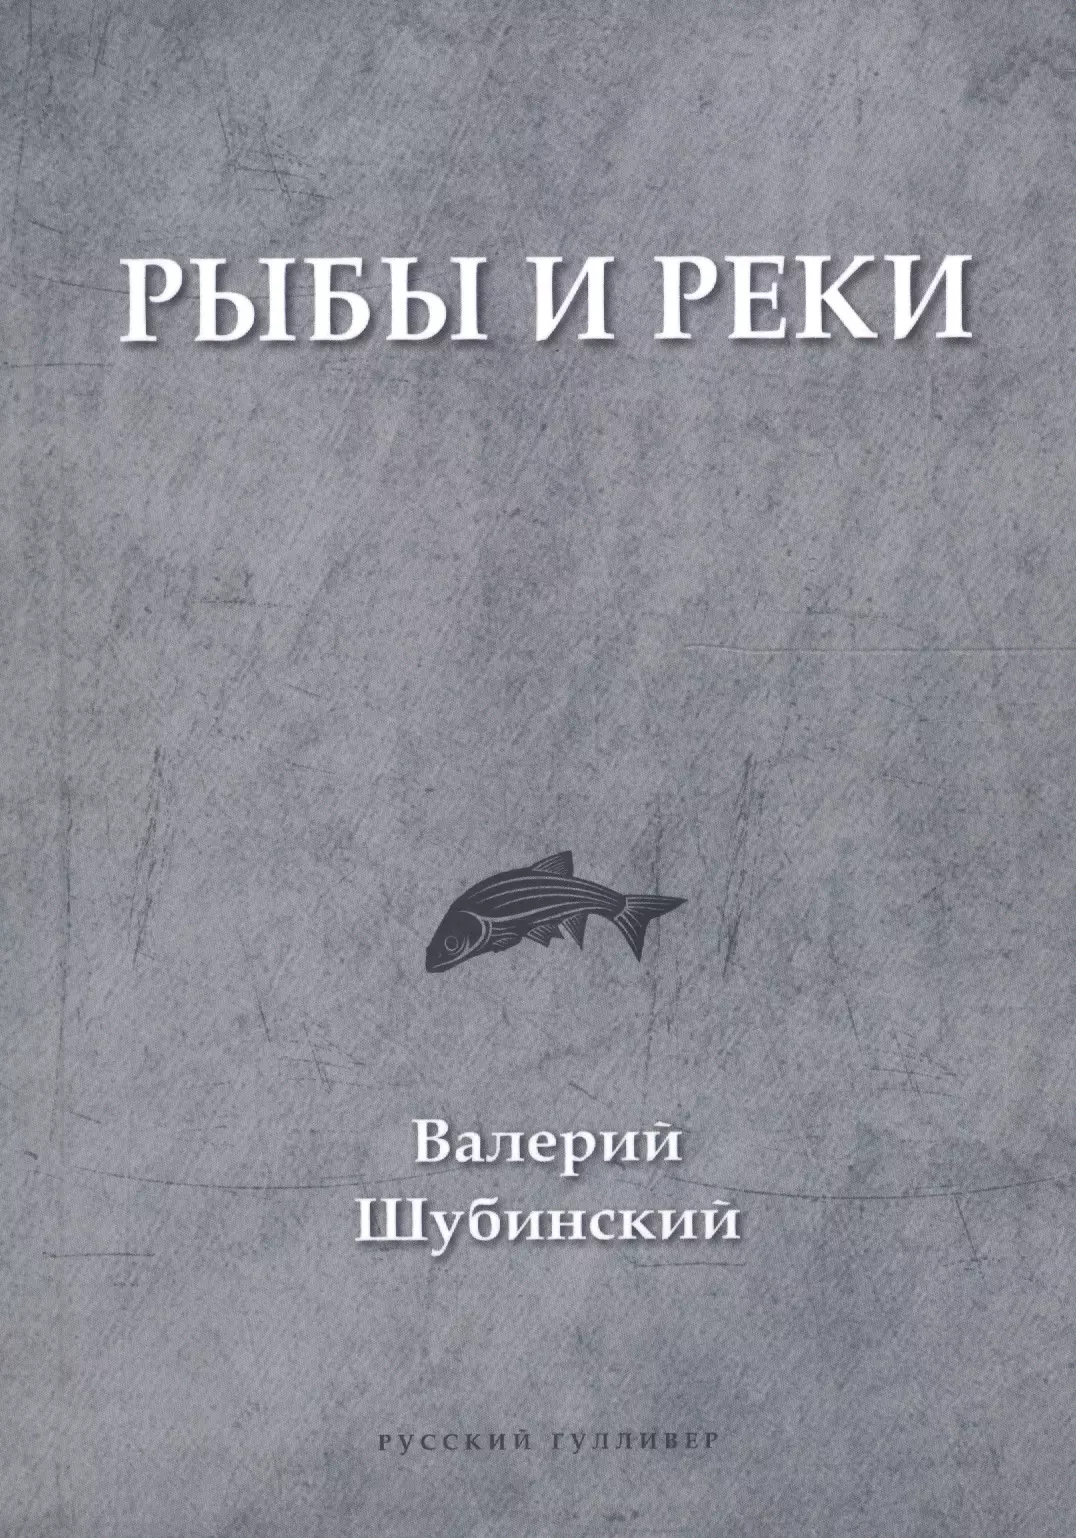 Кравченко книга реки. Книги про рыб. Книга река.